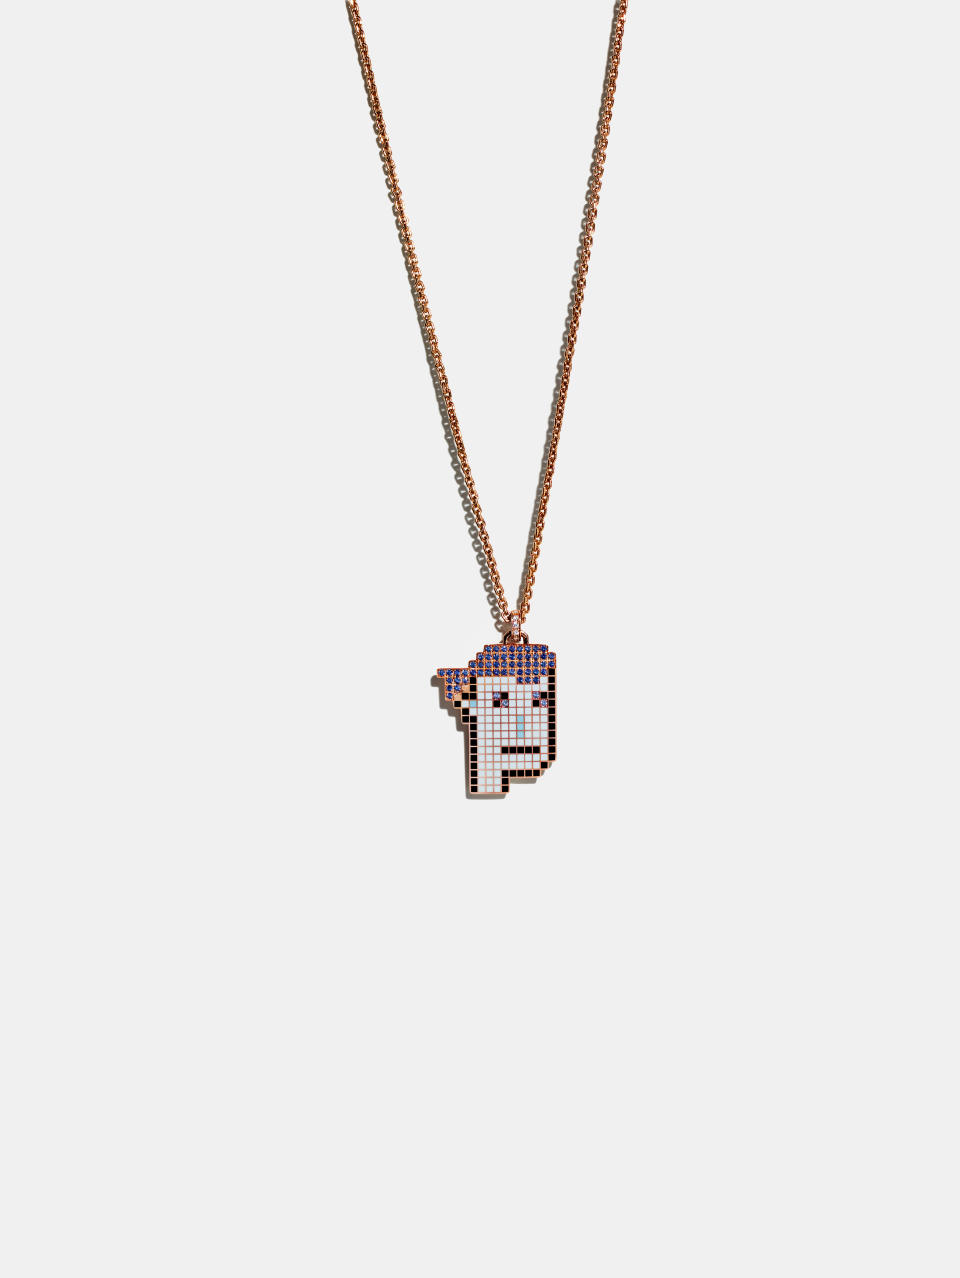 A closer look at a Tiffany Cryptopunk necklace. - Credit: Courtesy/Tiffany & Co.